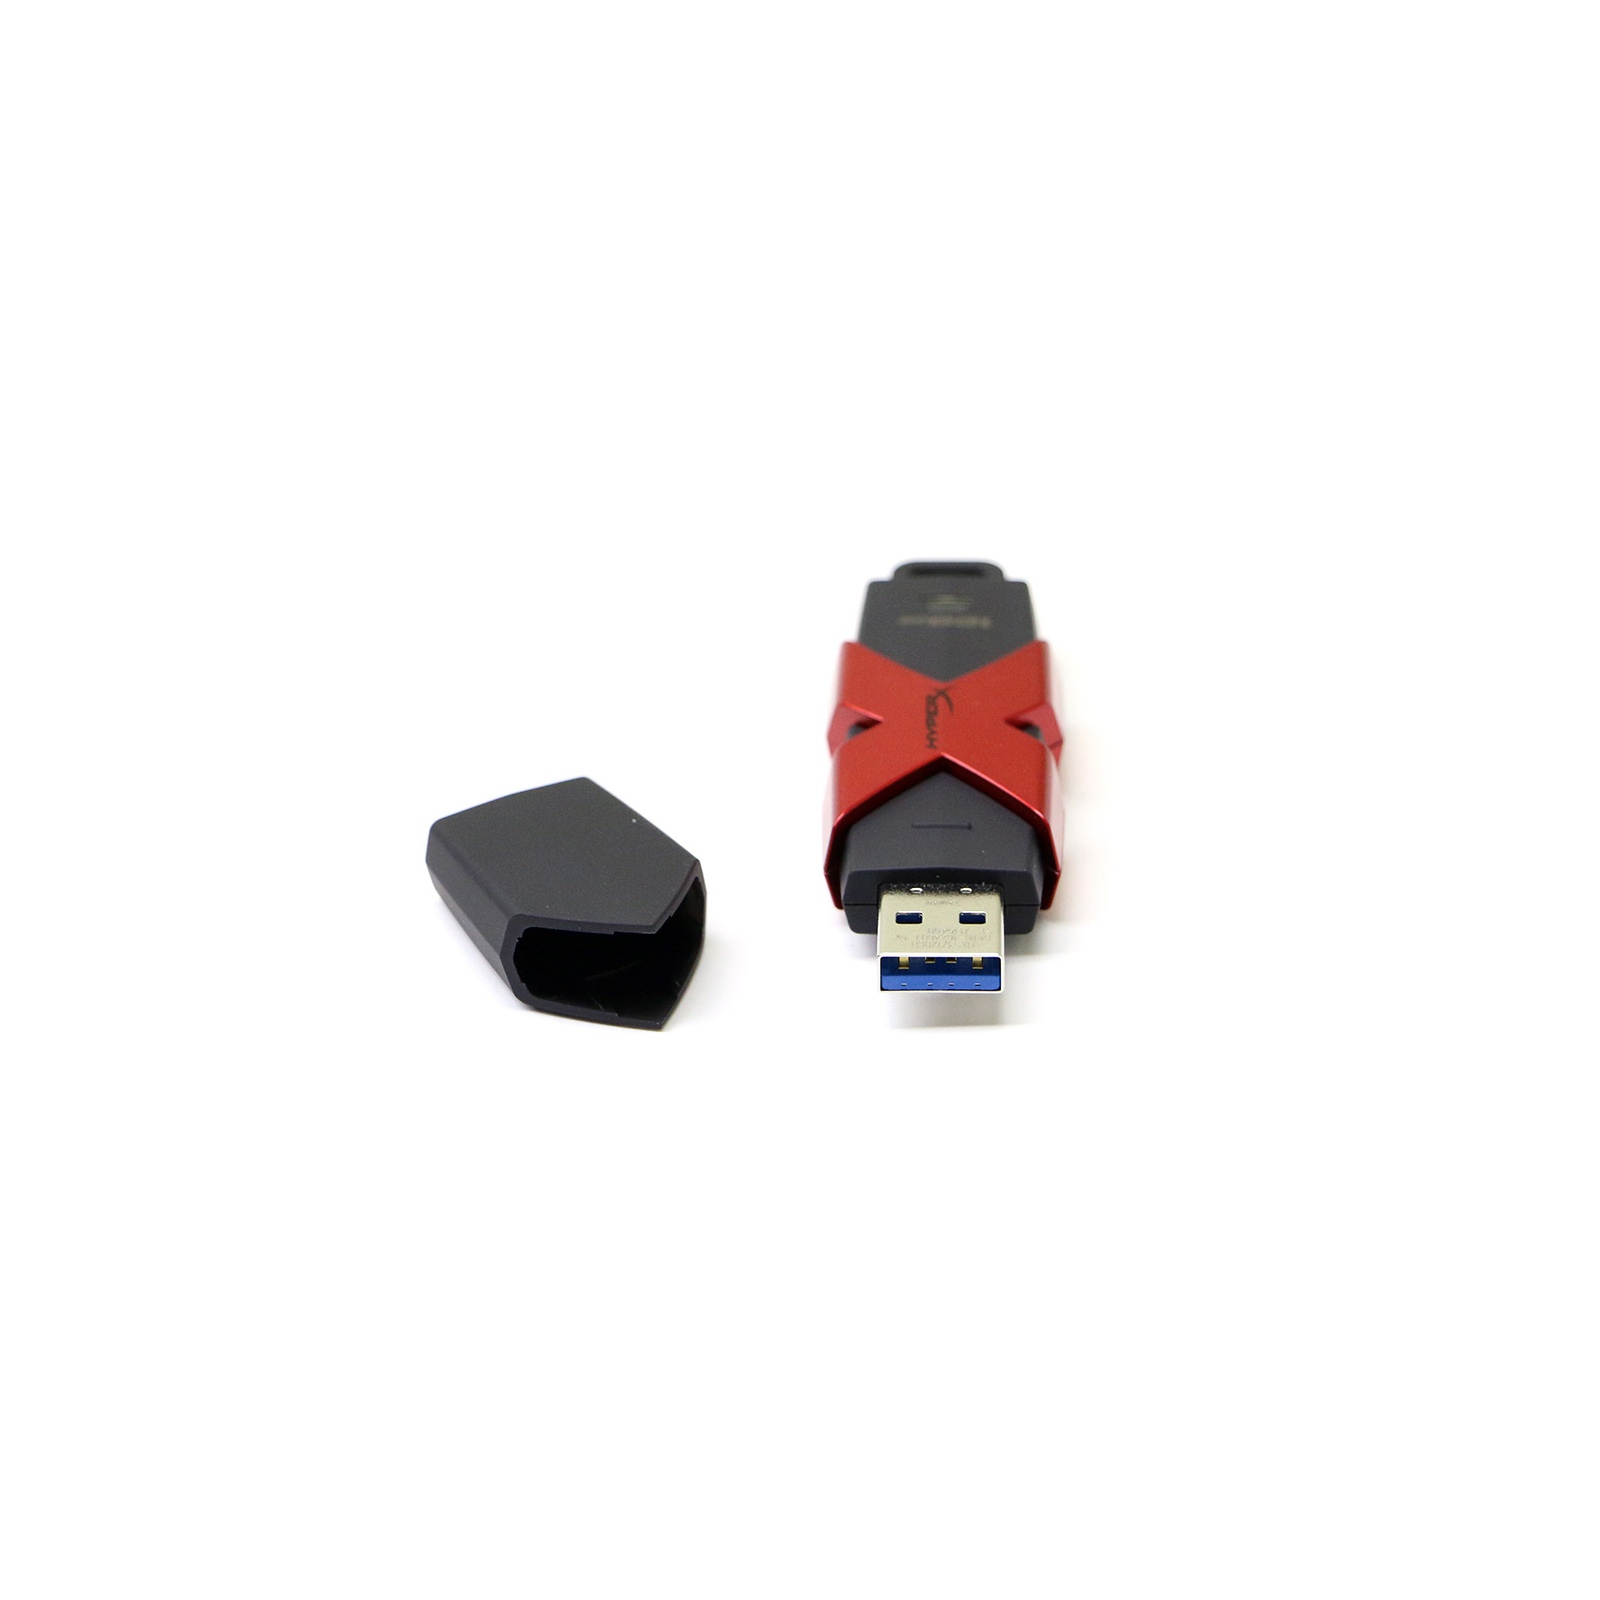 USB флеш накопитель Kingston 256GB HyperX Savage USB 3.1 (HXS3/256GB) изображение 3